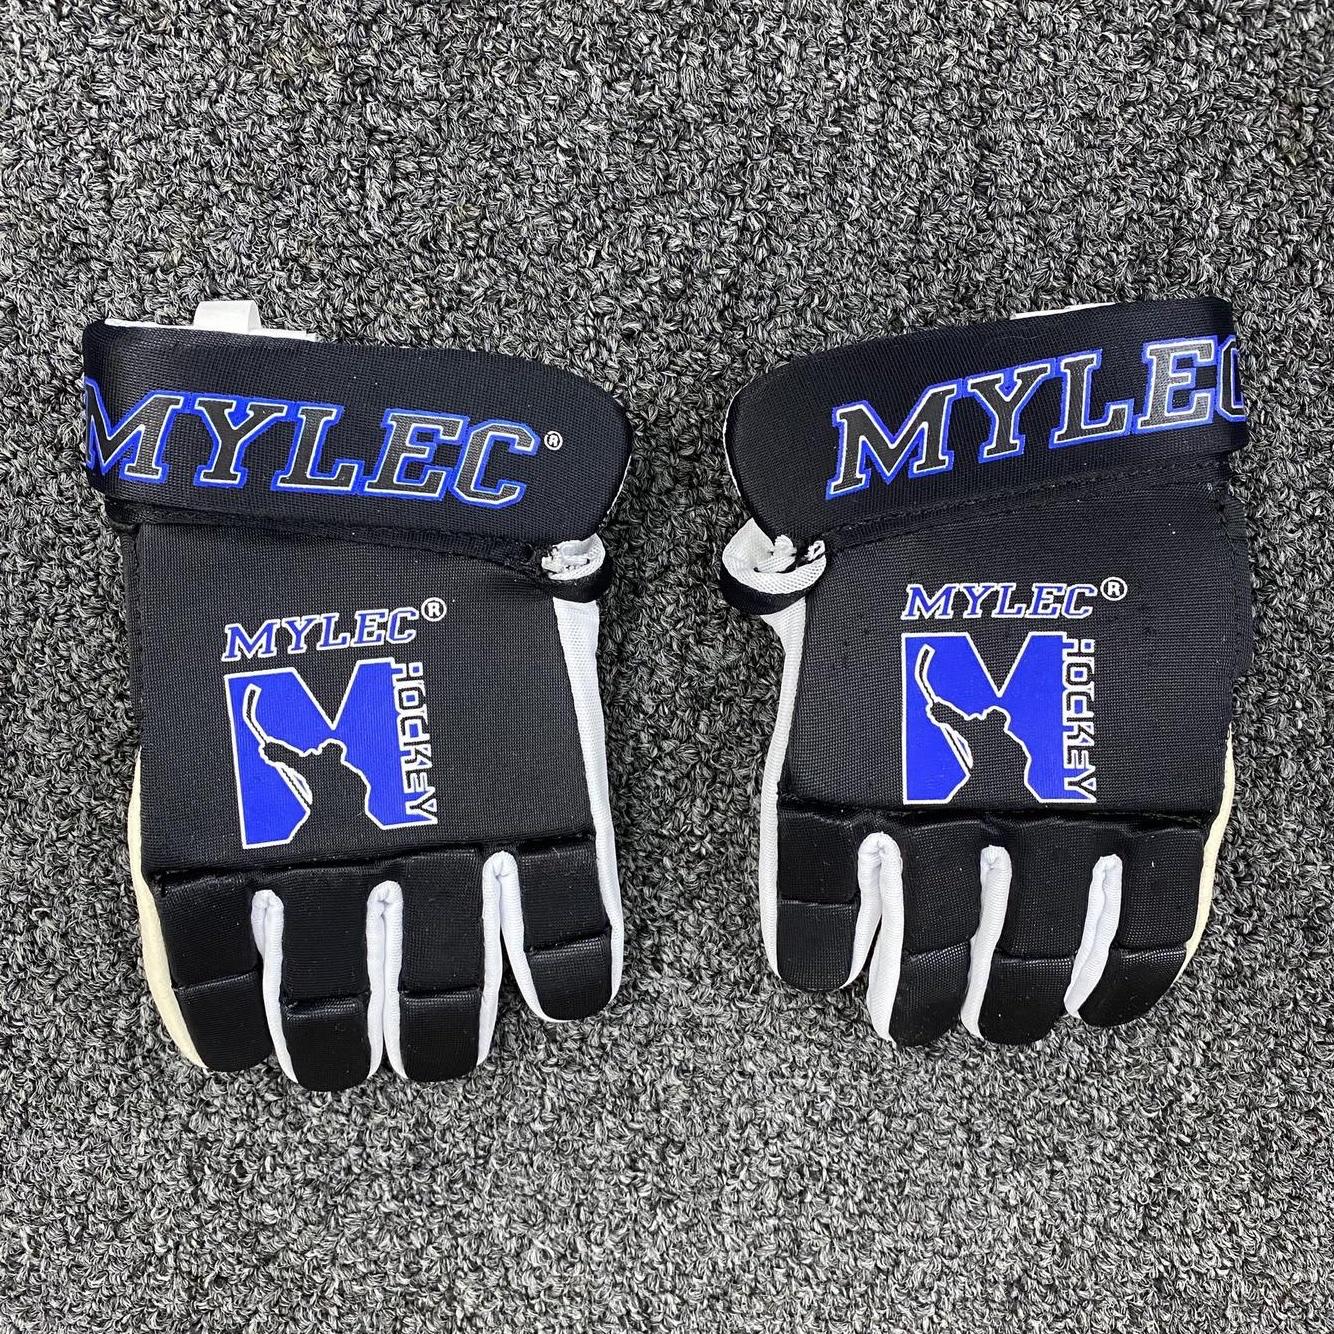 Mylec MK1 Player Street Hockey Gloves Senior size M retails $35 